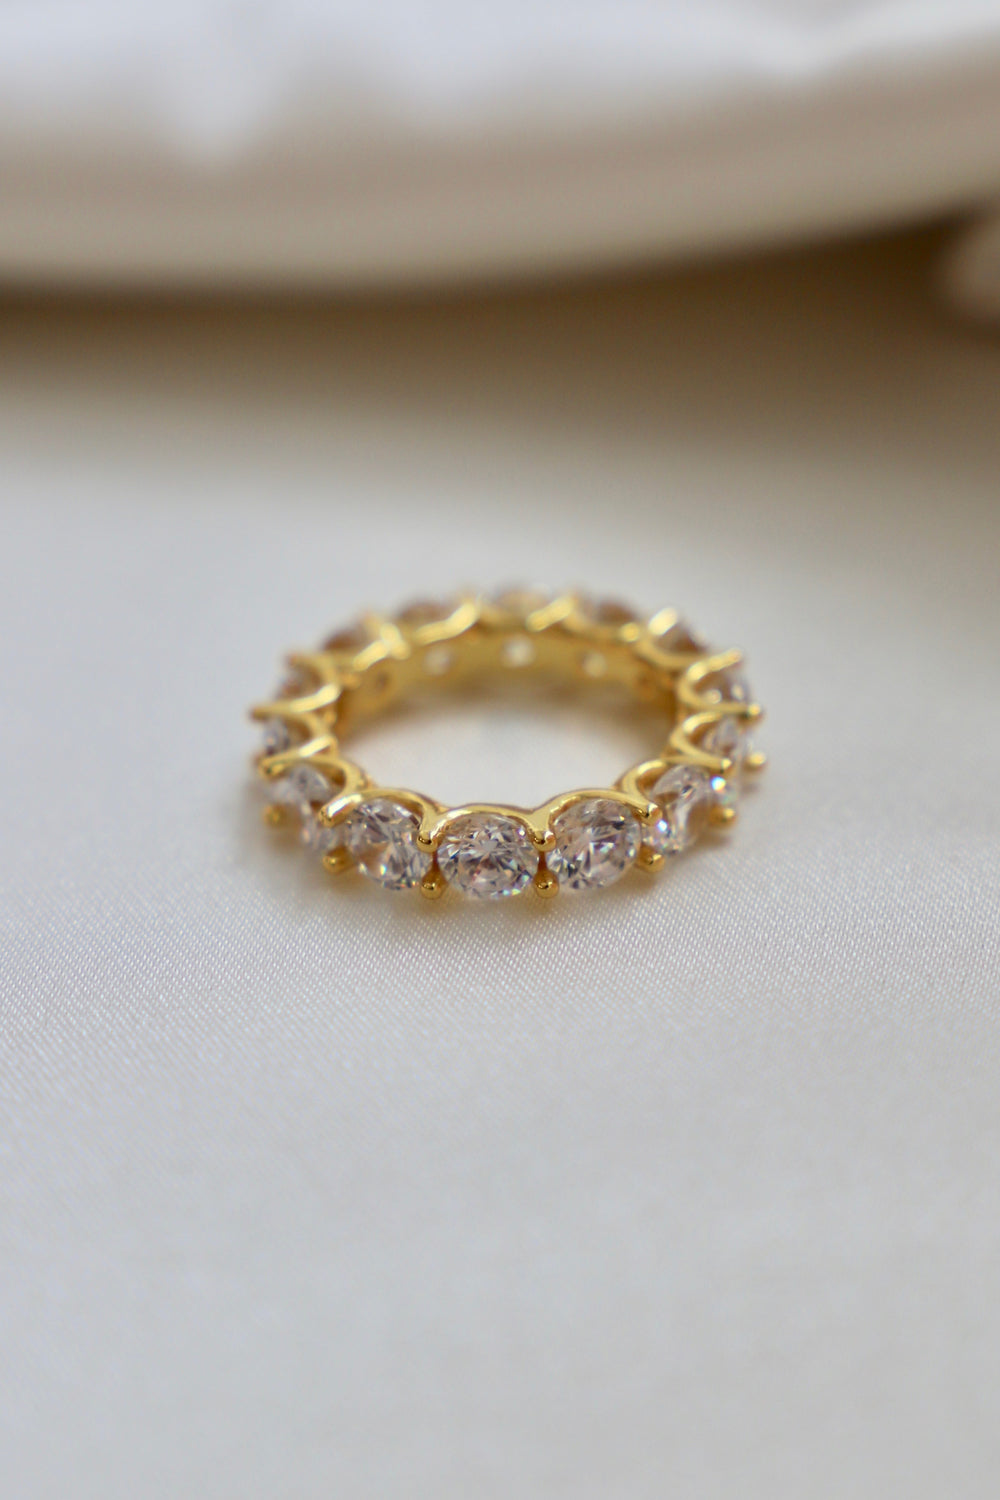 Rings for Women | Katie Waltman – Katie Waltman Jewelry